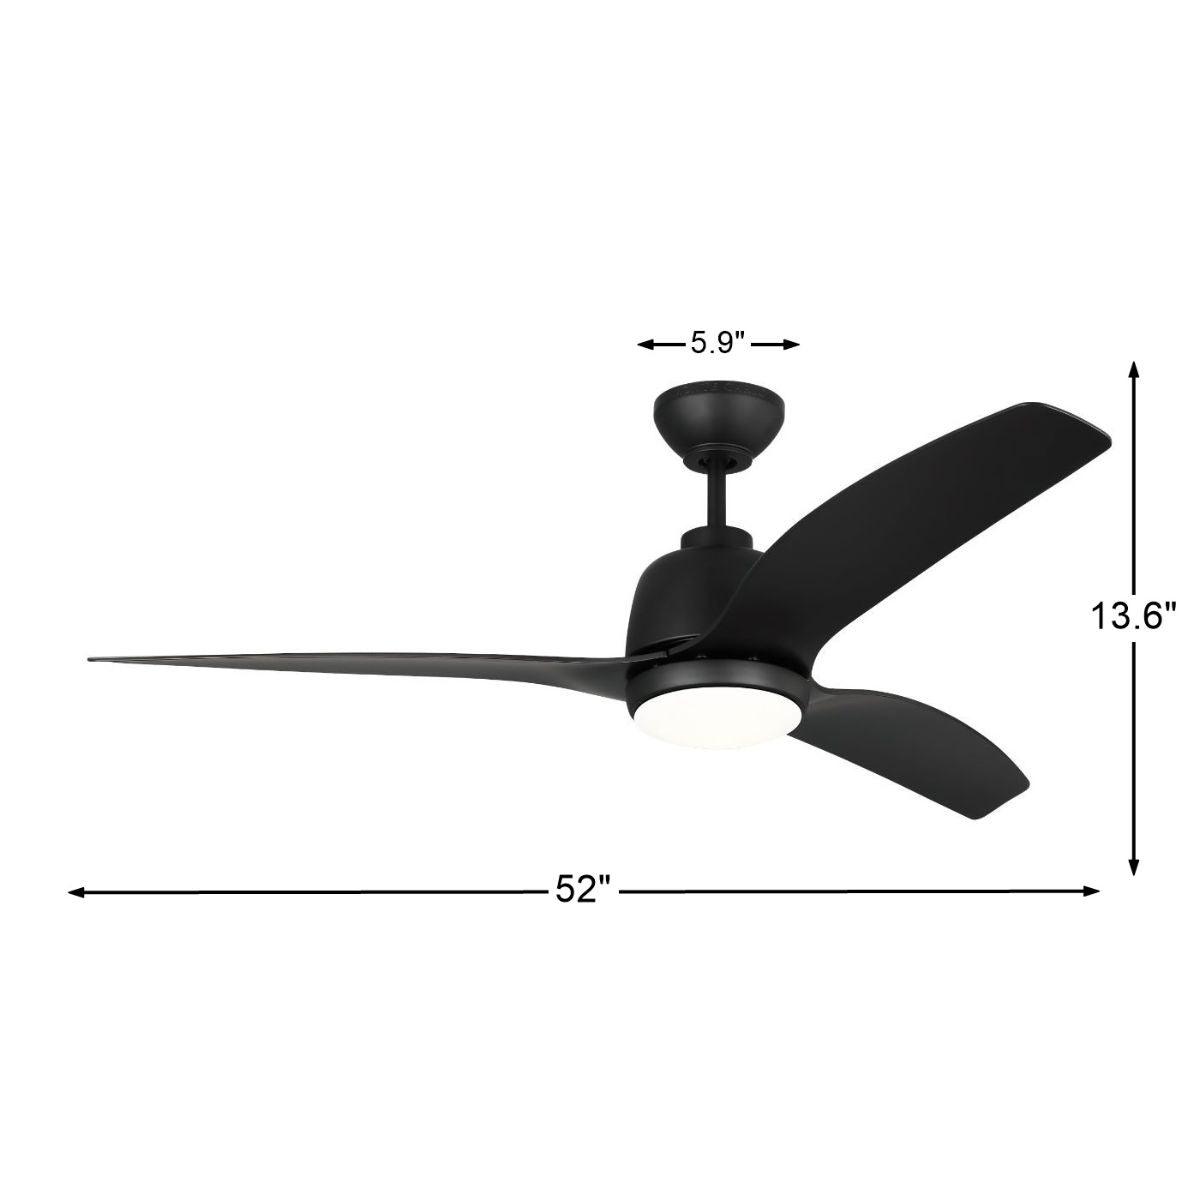 Avila Coastal 54 Inch Midnight Black Outdoor Ceiling Fan With Light And Remote, Marine Grade